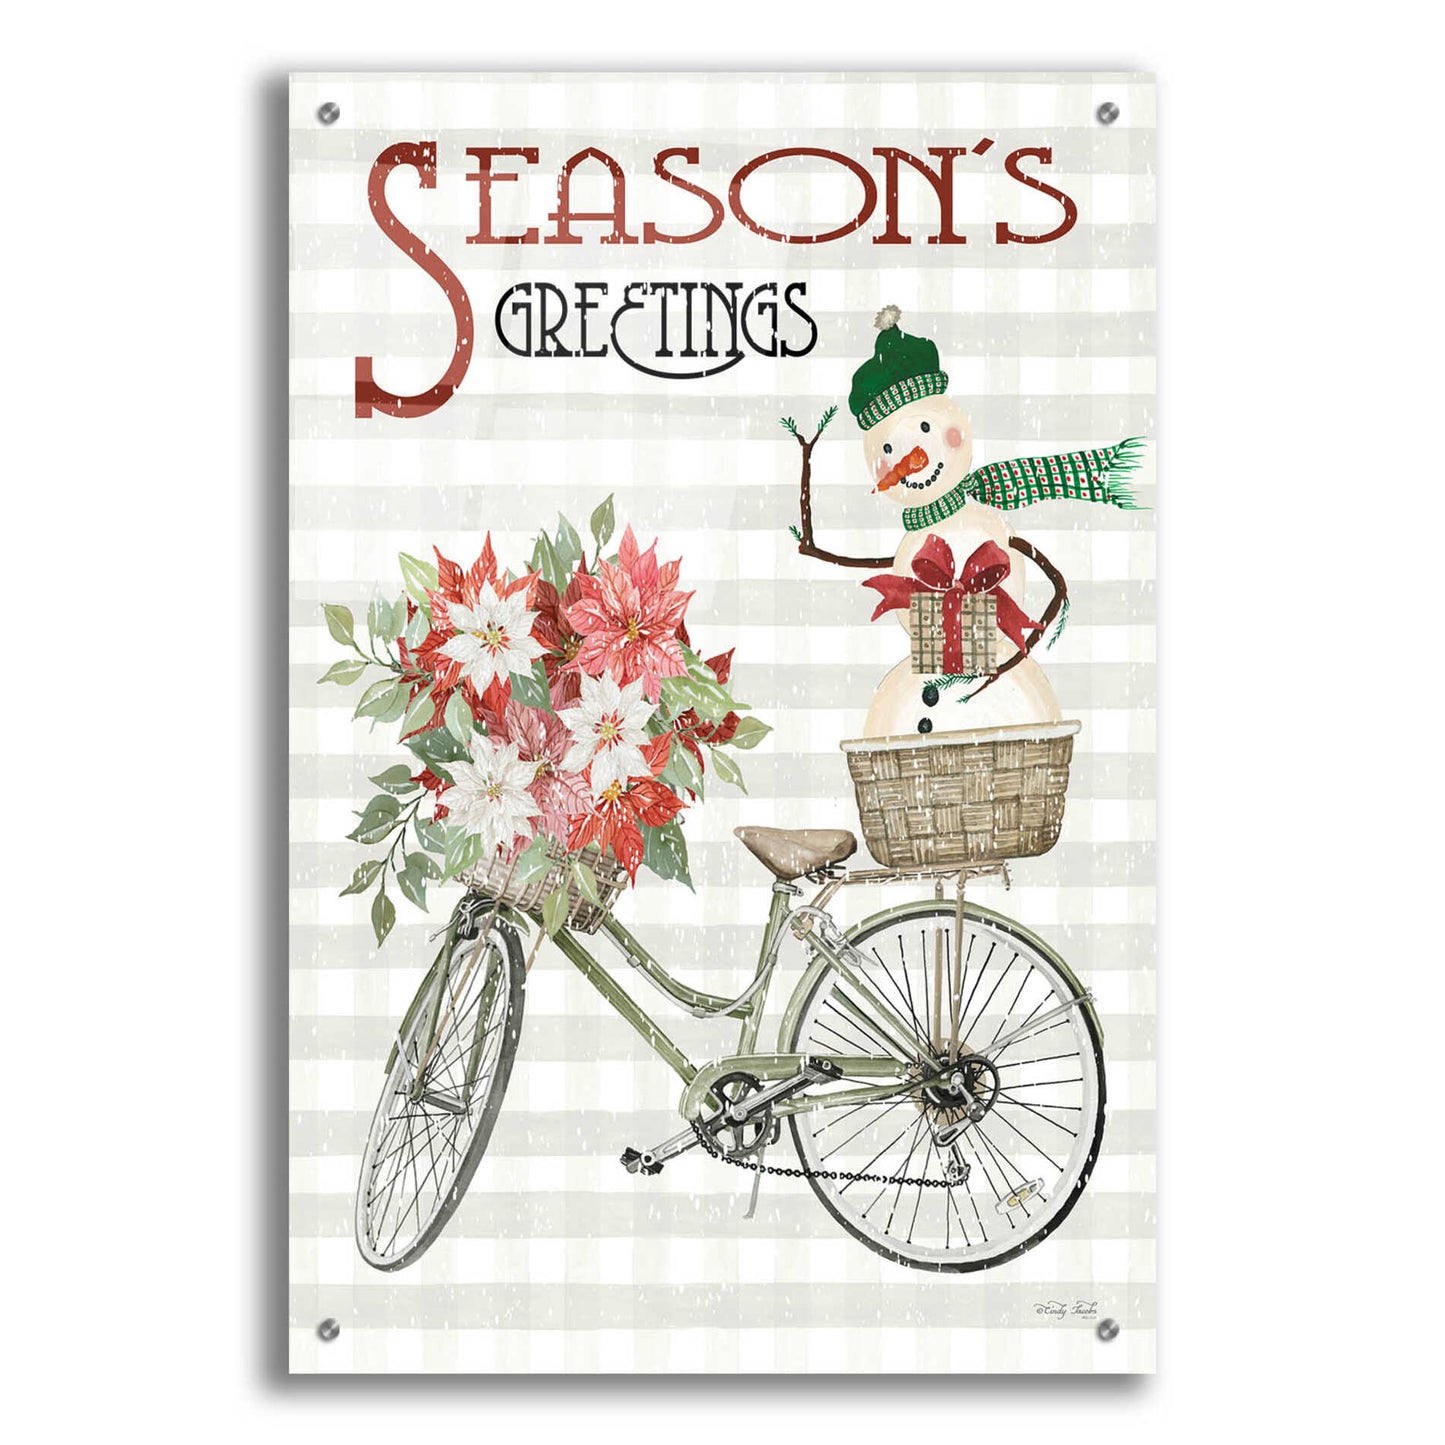 Epic Art 'Season's Greetings Bicycle' by Cindy Jacobs, Acrylic Glass Wall Art,24x36